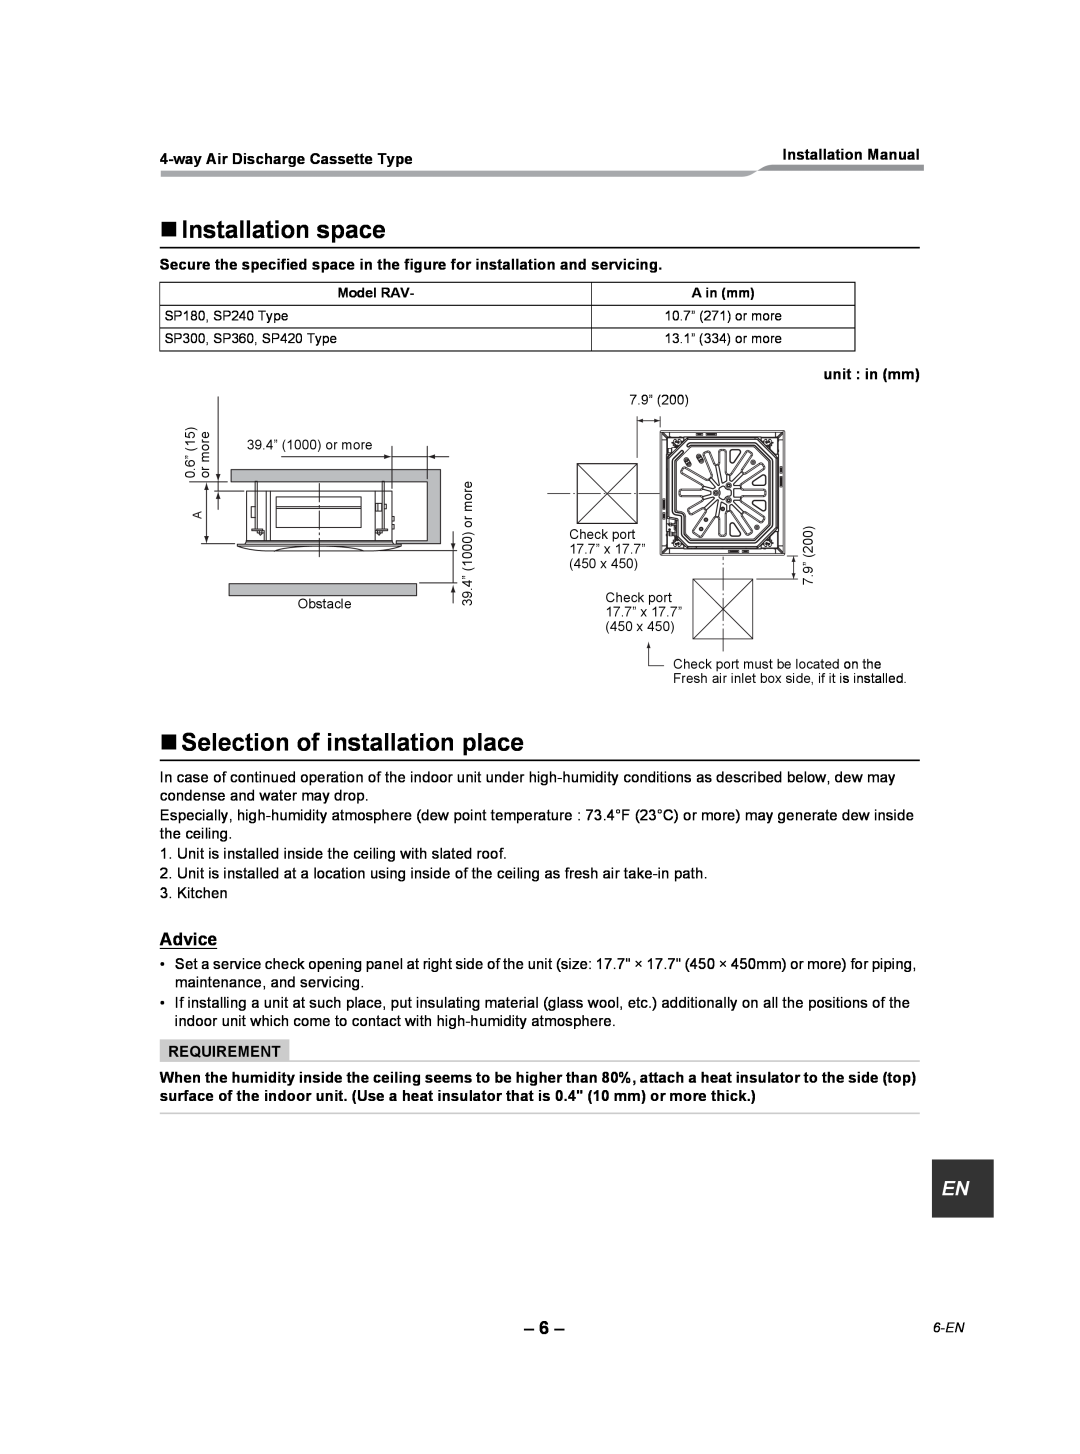 Toshiba RAV-SP180UT-UL „Installation space, „Selection of installation place, Advice, wayAir Discharge Cassette Type 